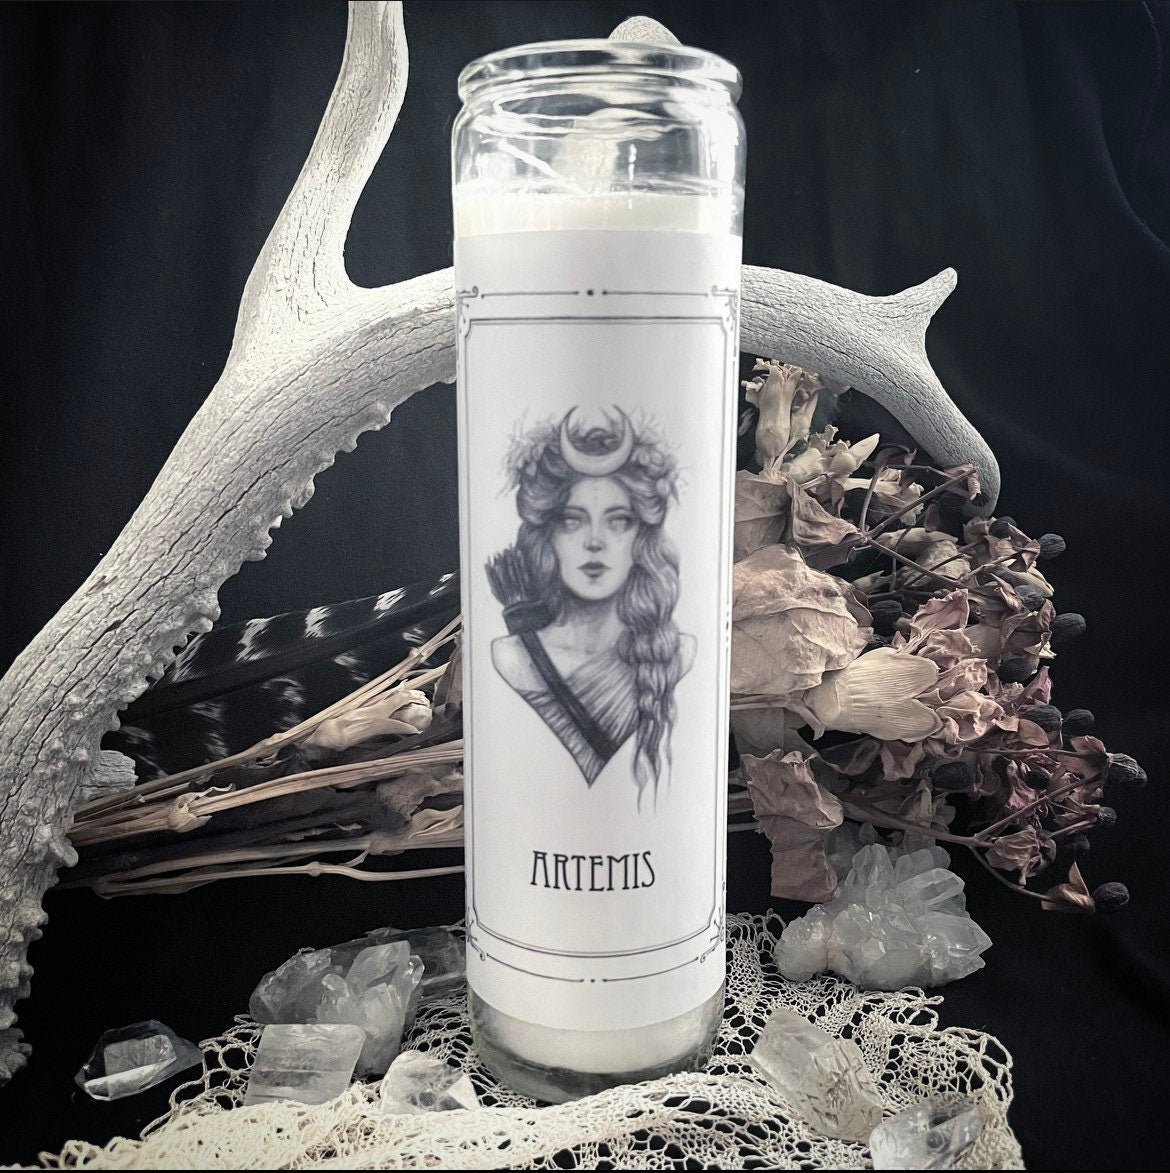 Artemis Devotional Candle Sticker - 3x6” High Quality Vinyl Sticker